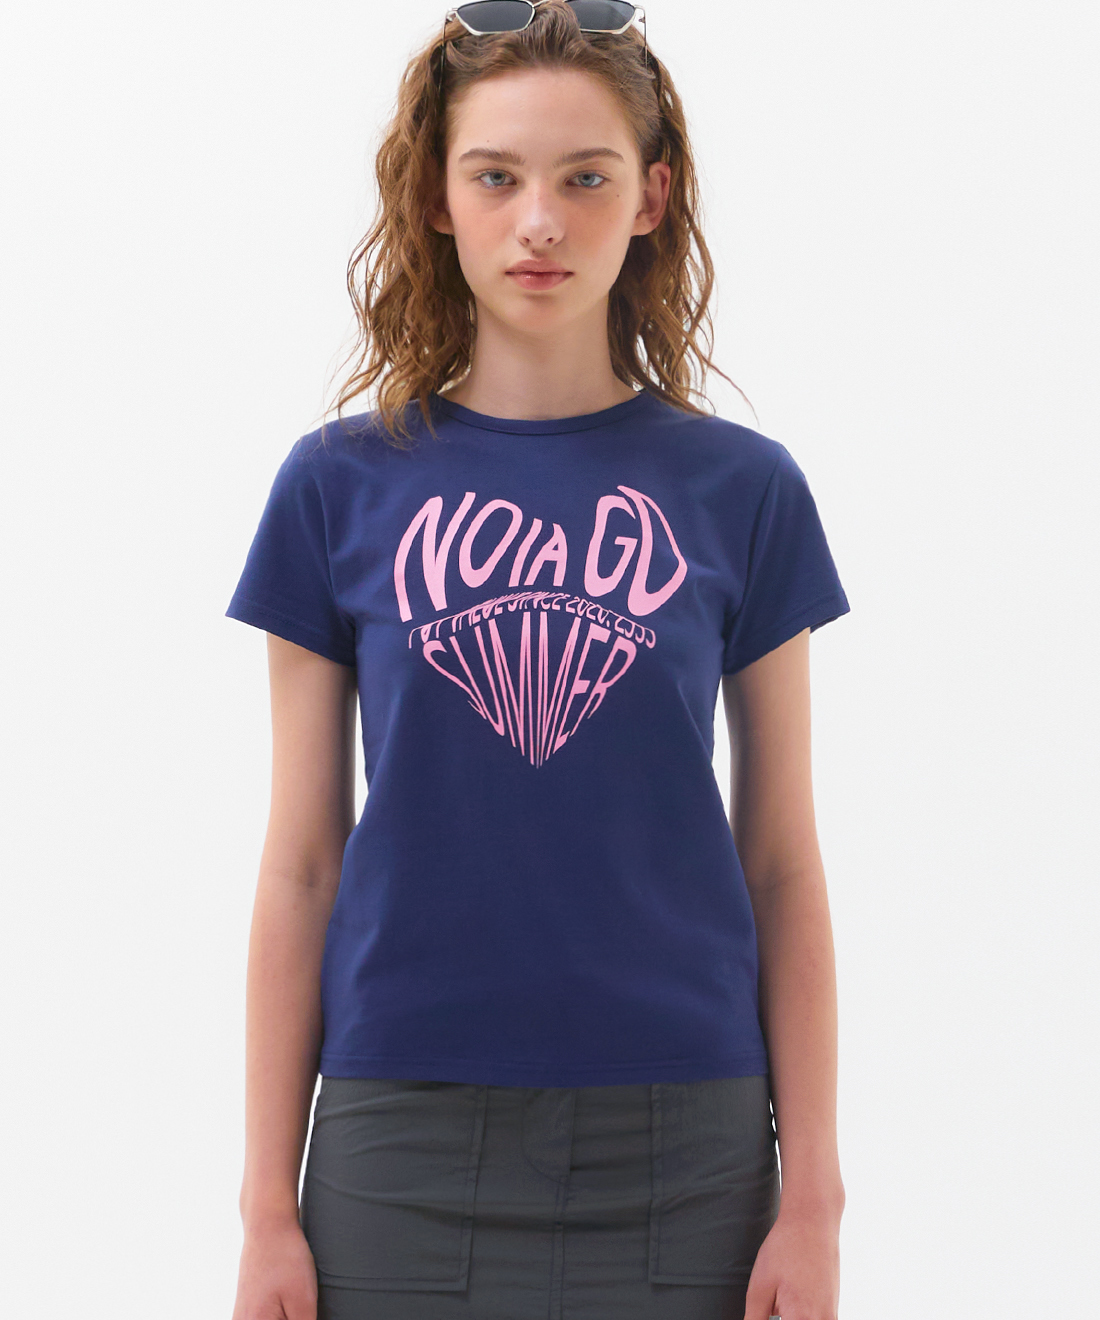 NOI932 summer love t-shirts (navy)